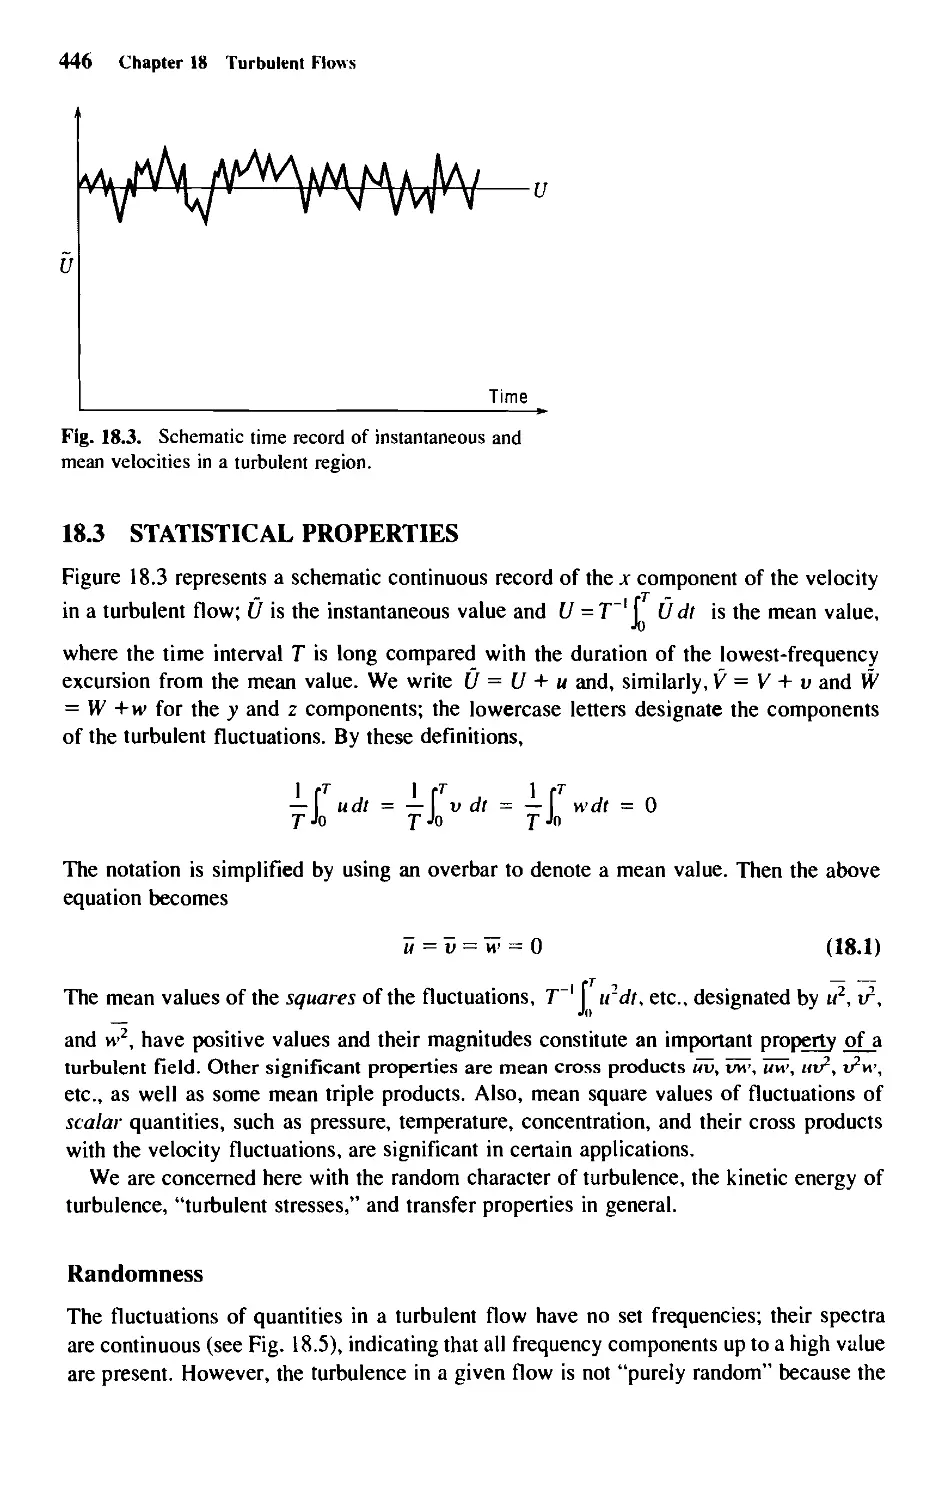 18.3 - Statistical Properties